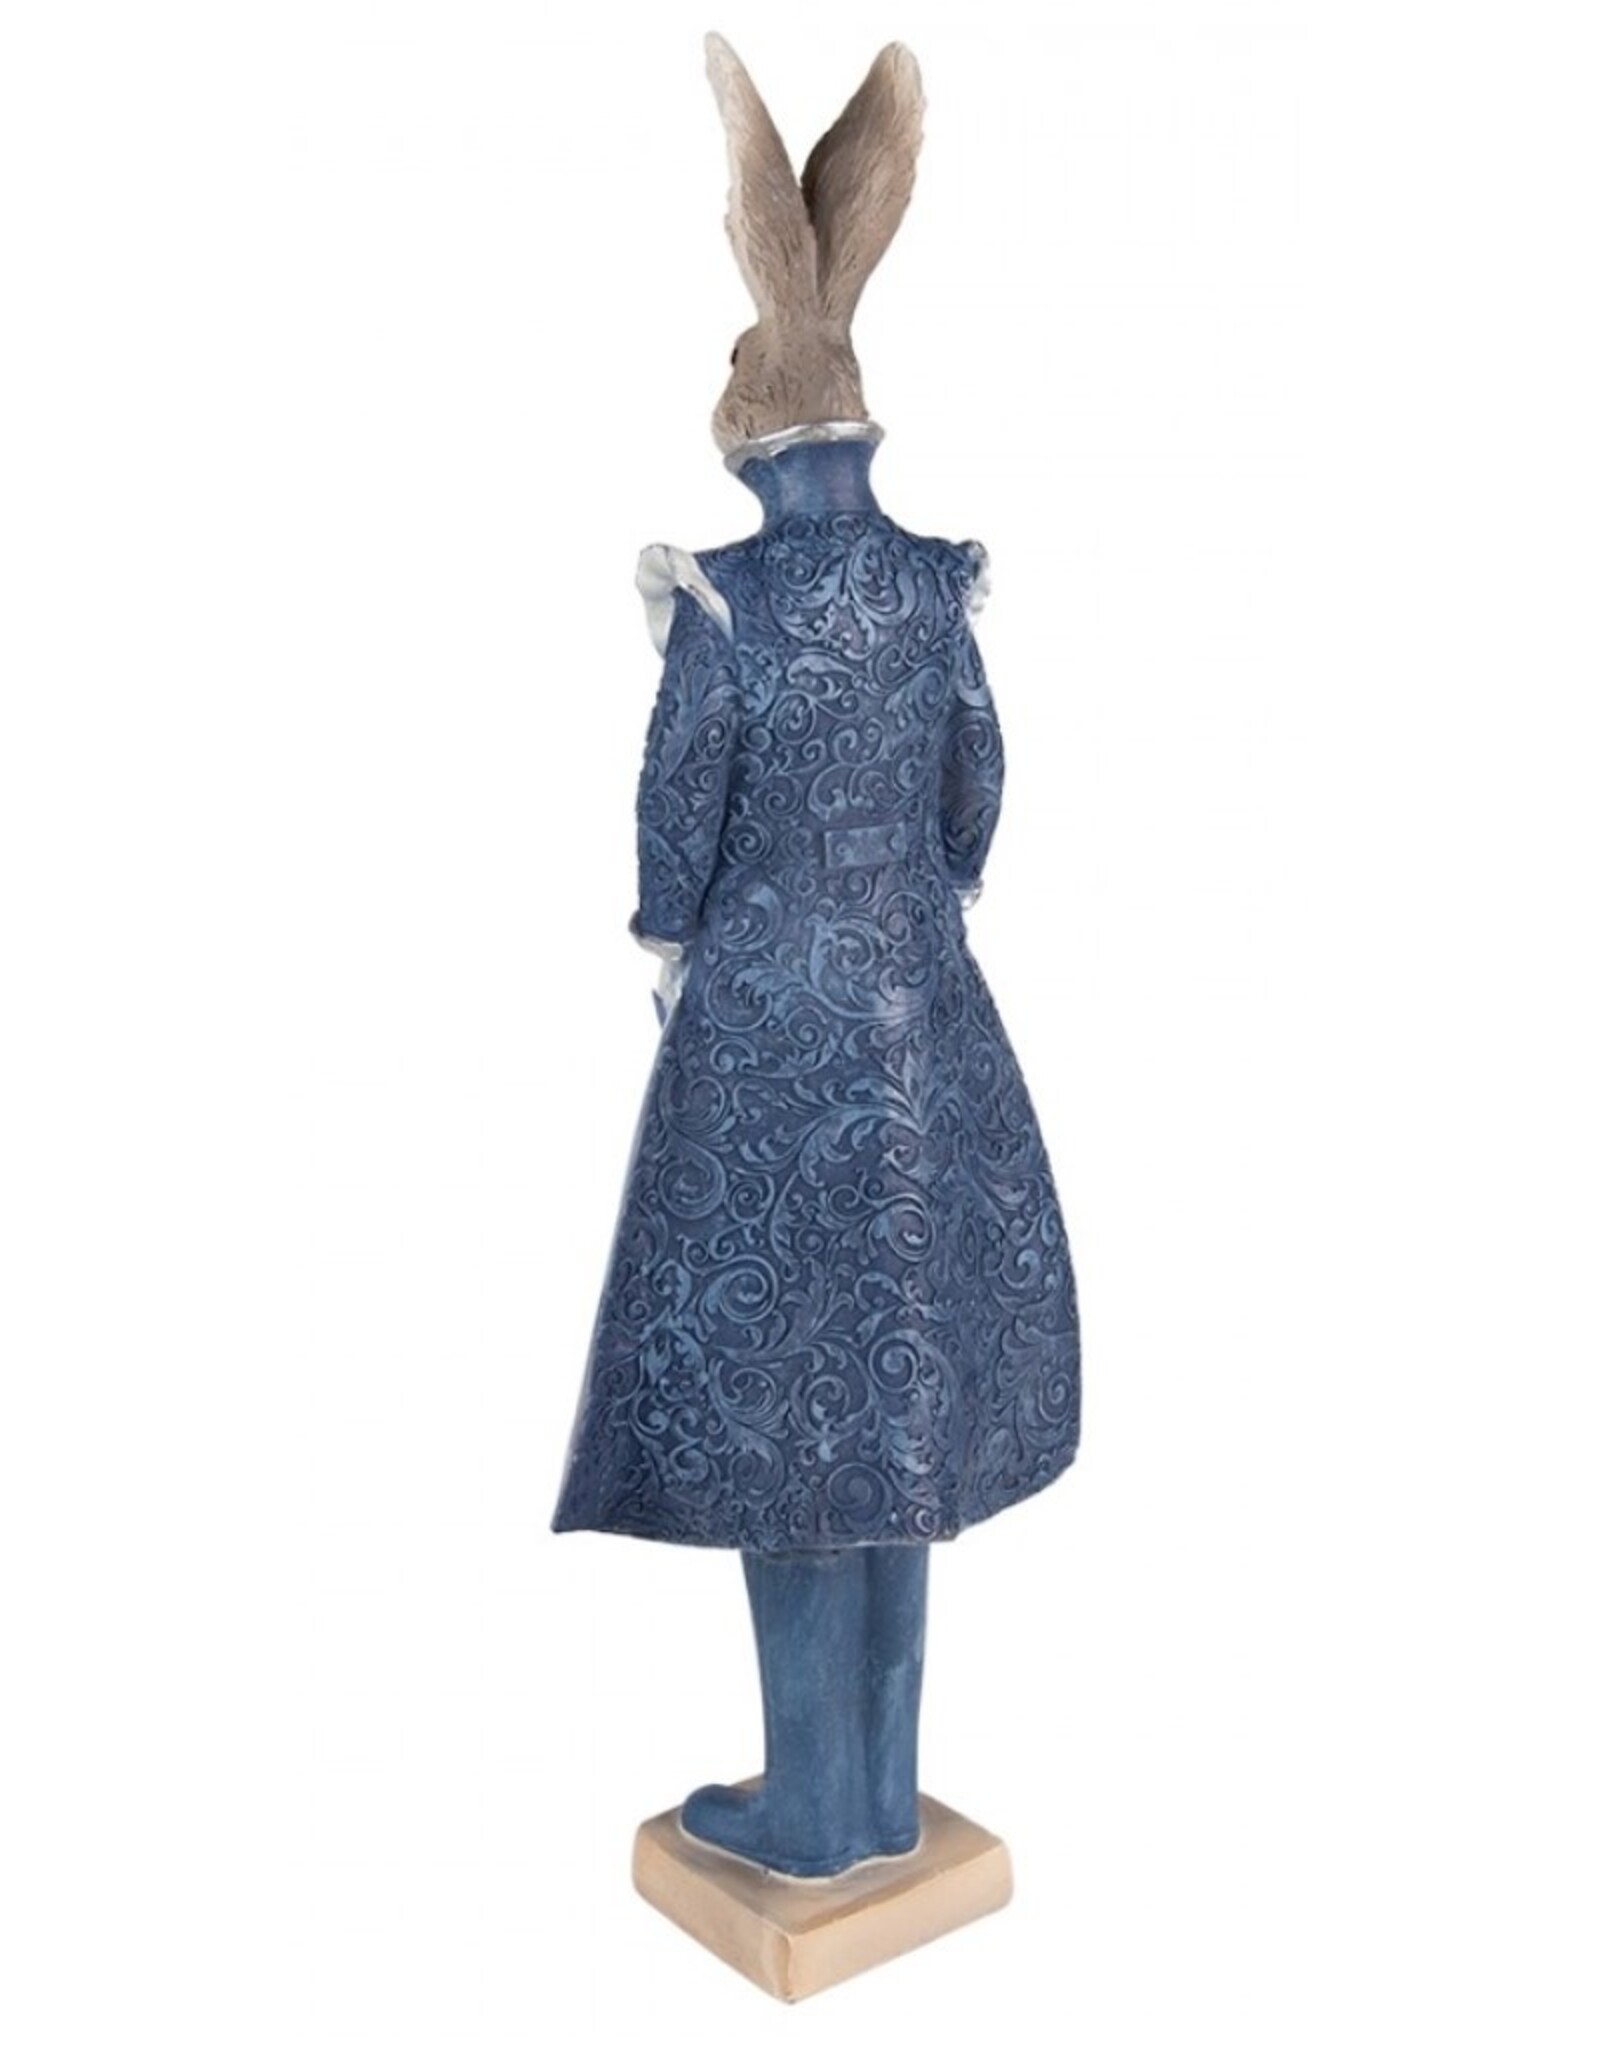 C&E Giftware & Lifestyle - Hare in blue Victorian dress figurine 44cm